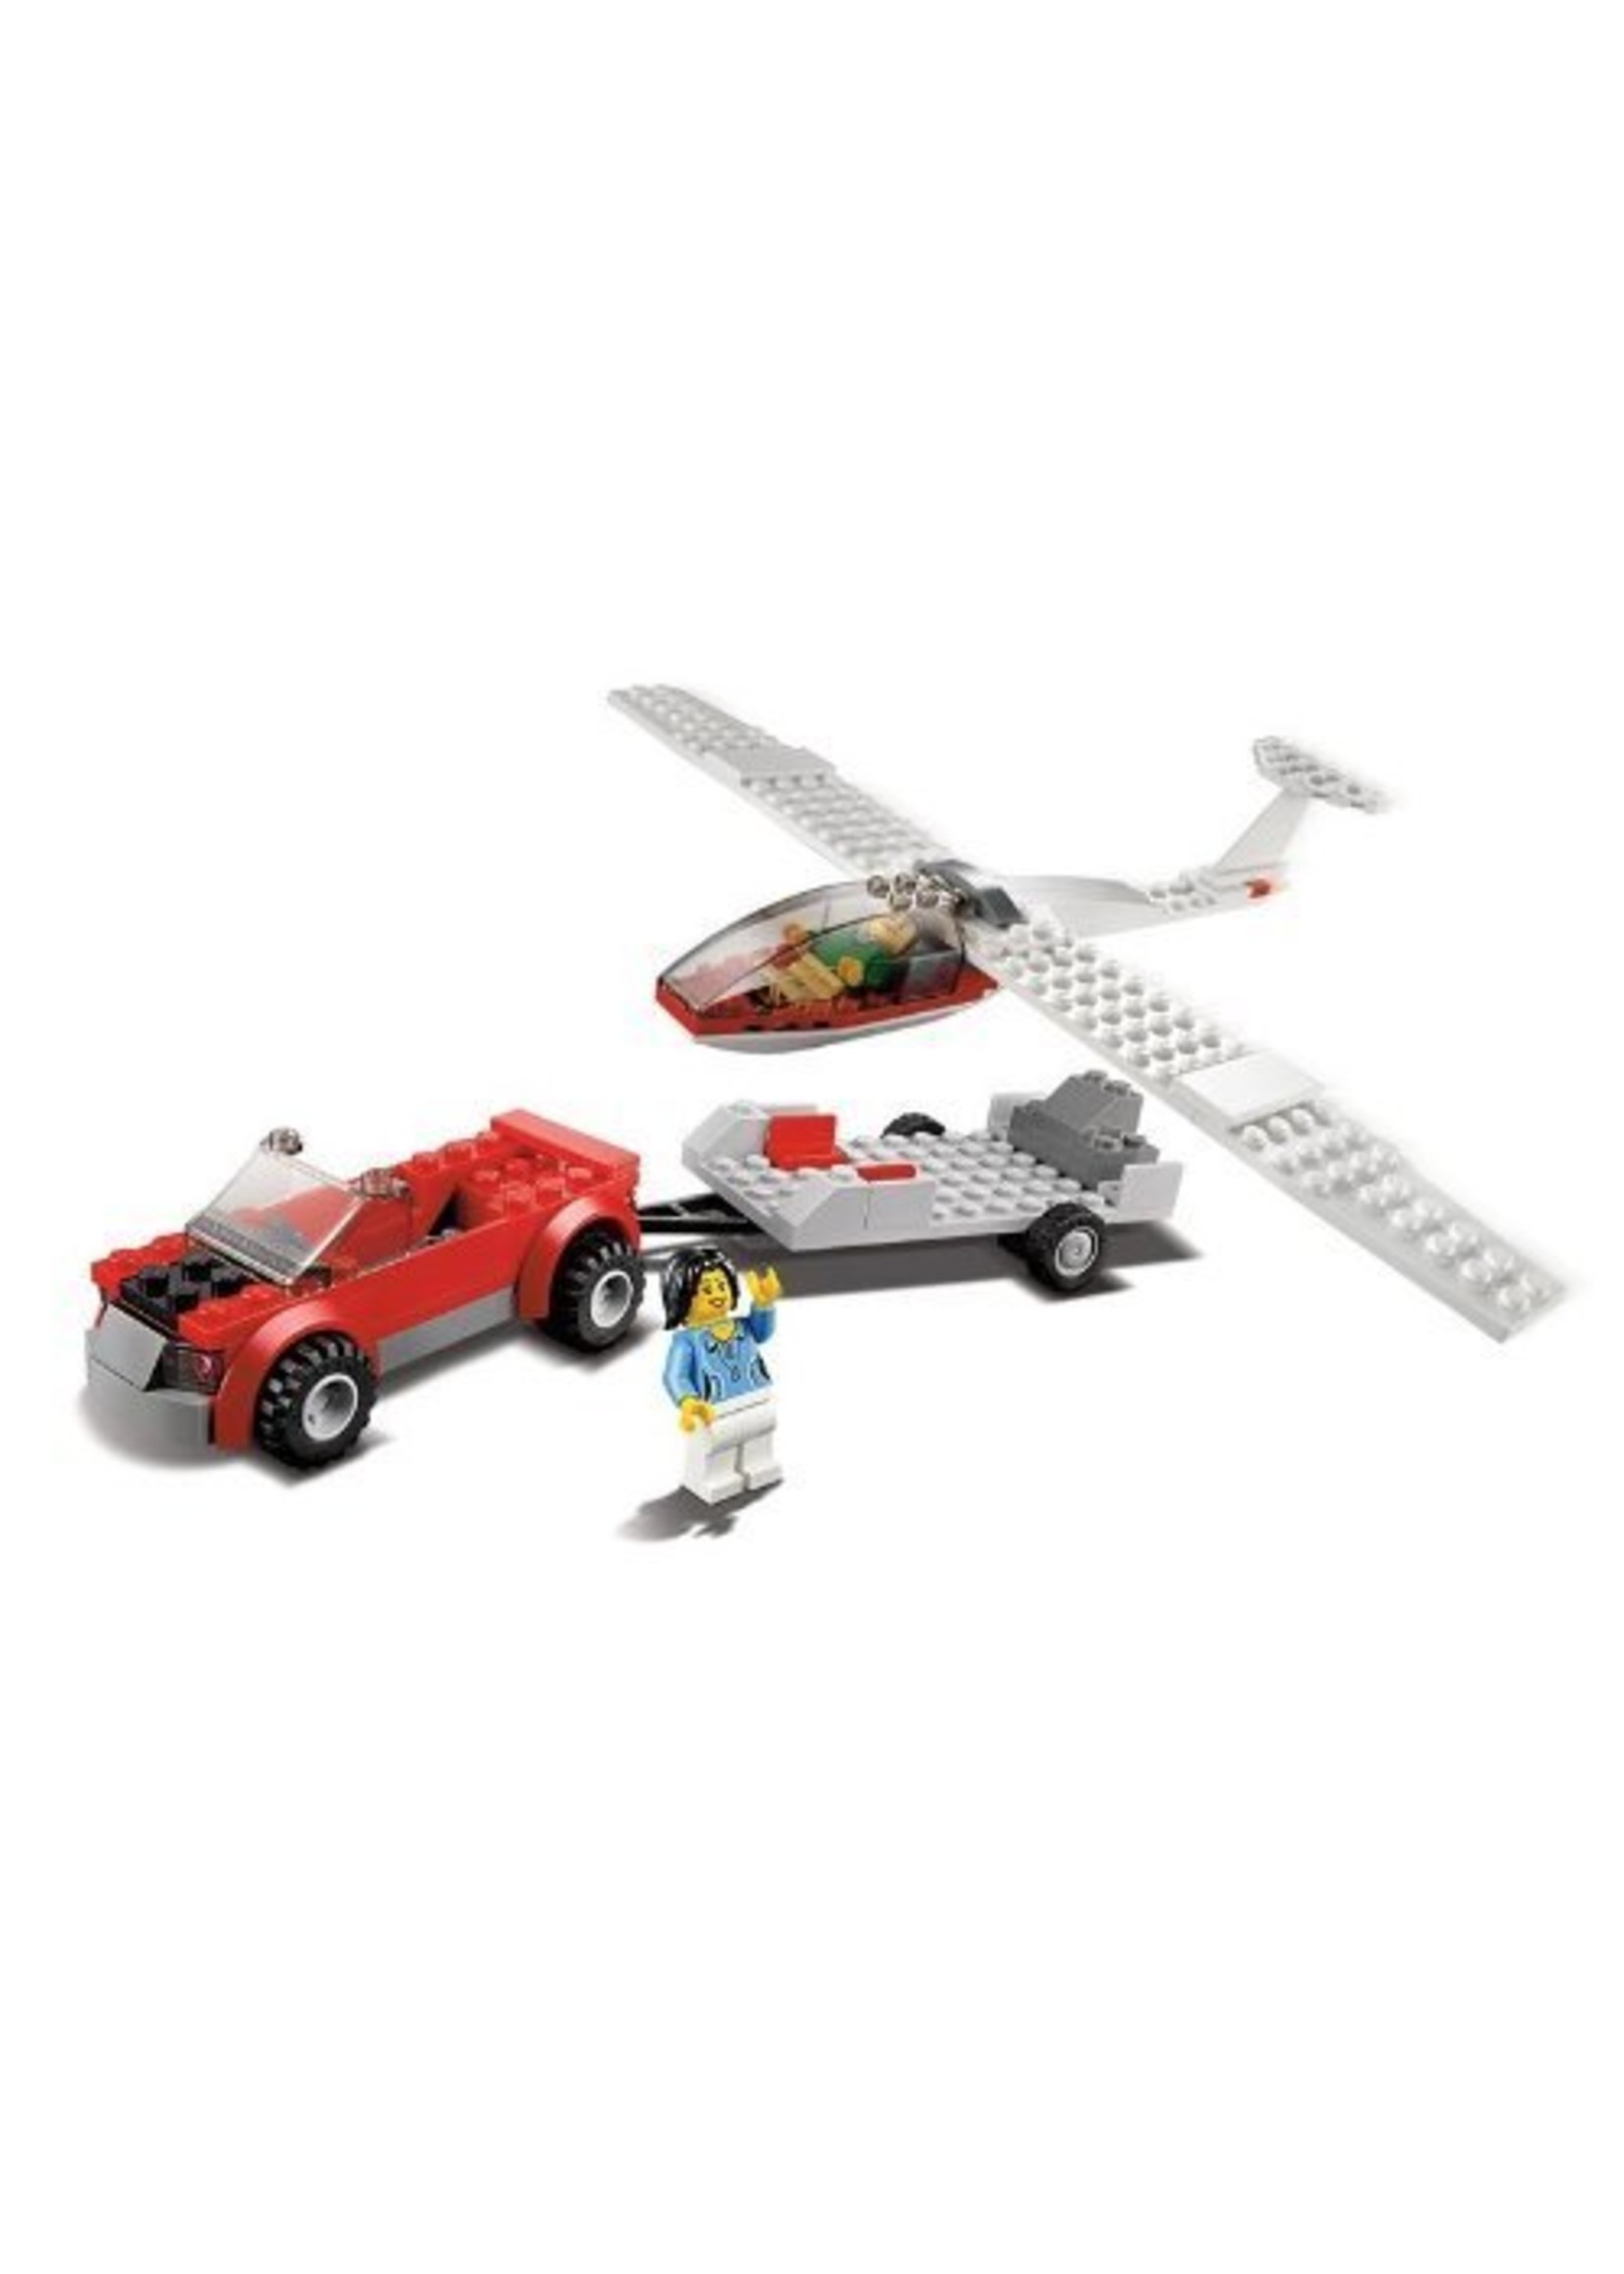 Lego City 4442 Virgin Atlantic Exclusive Set